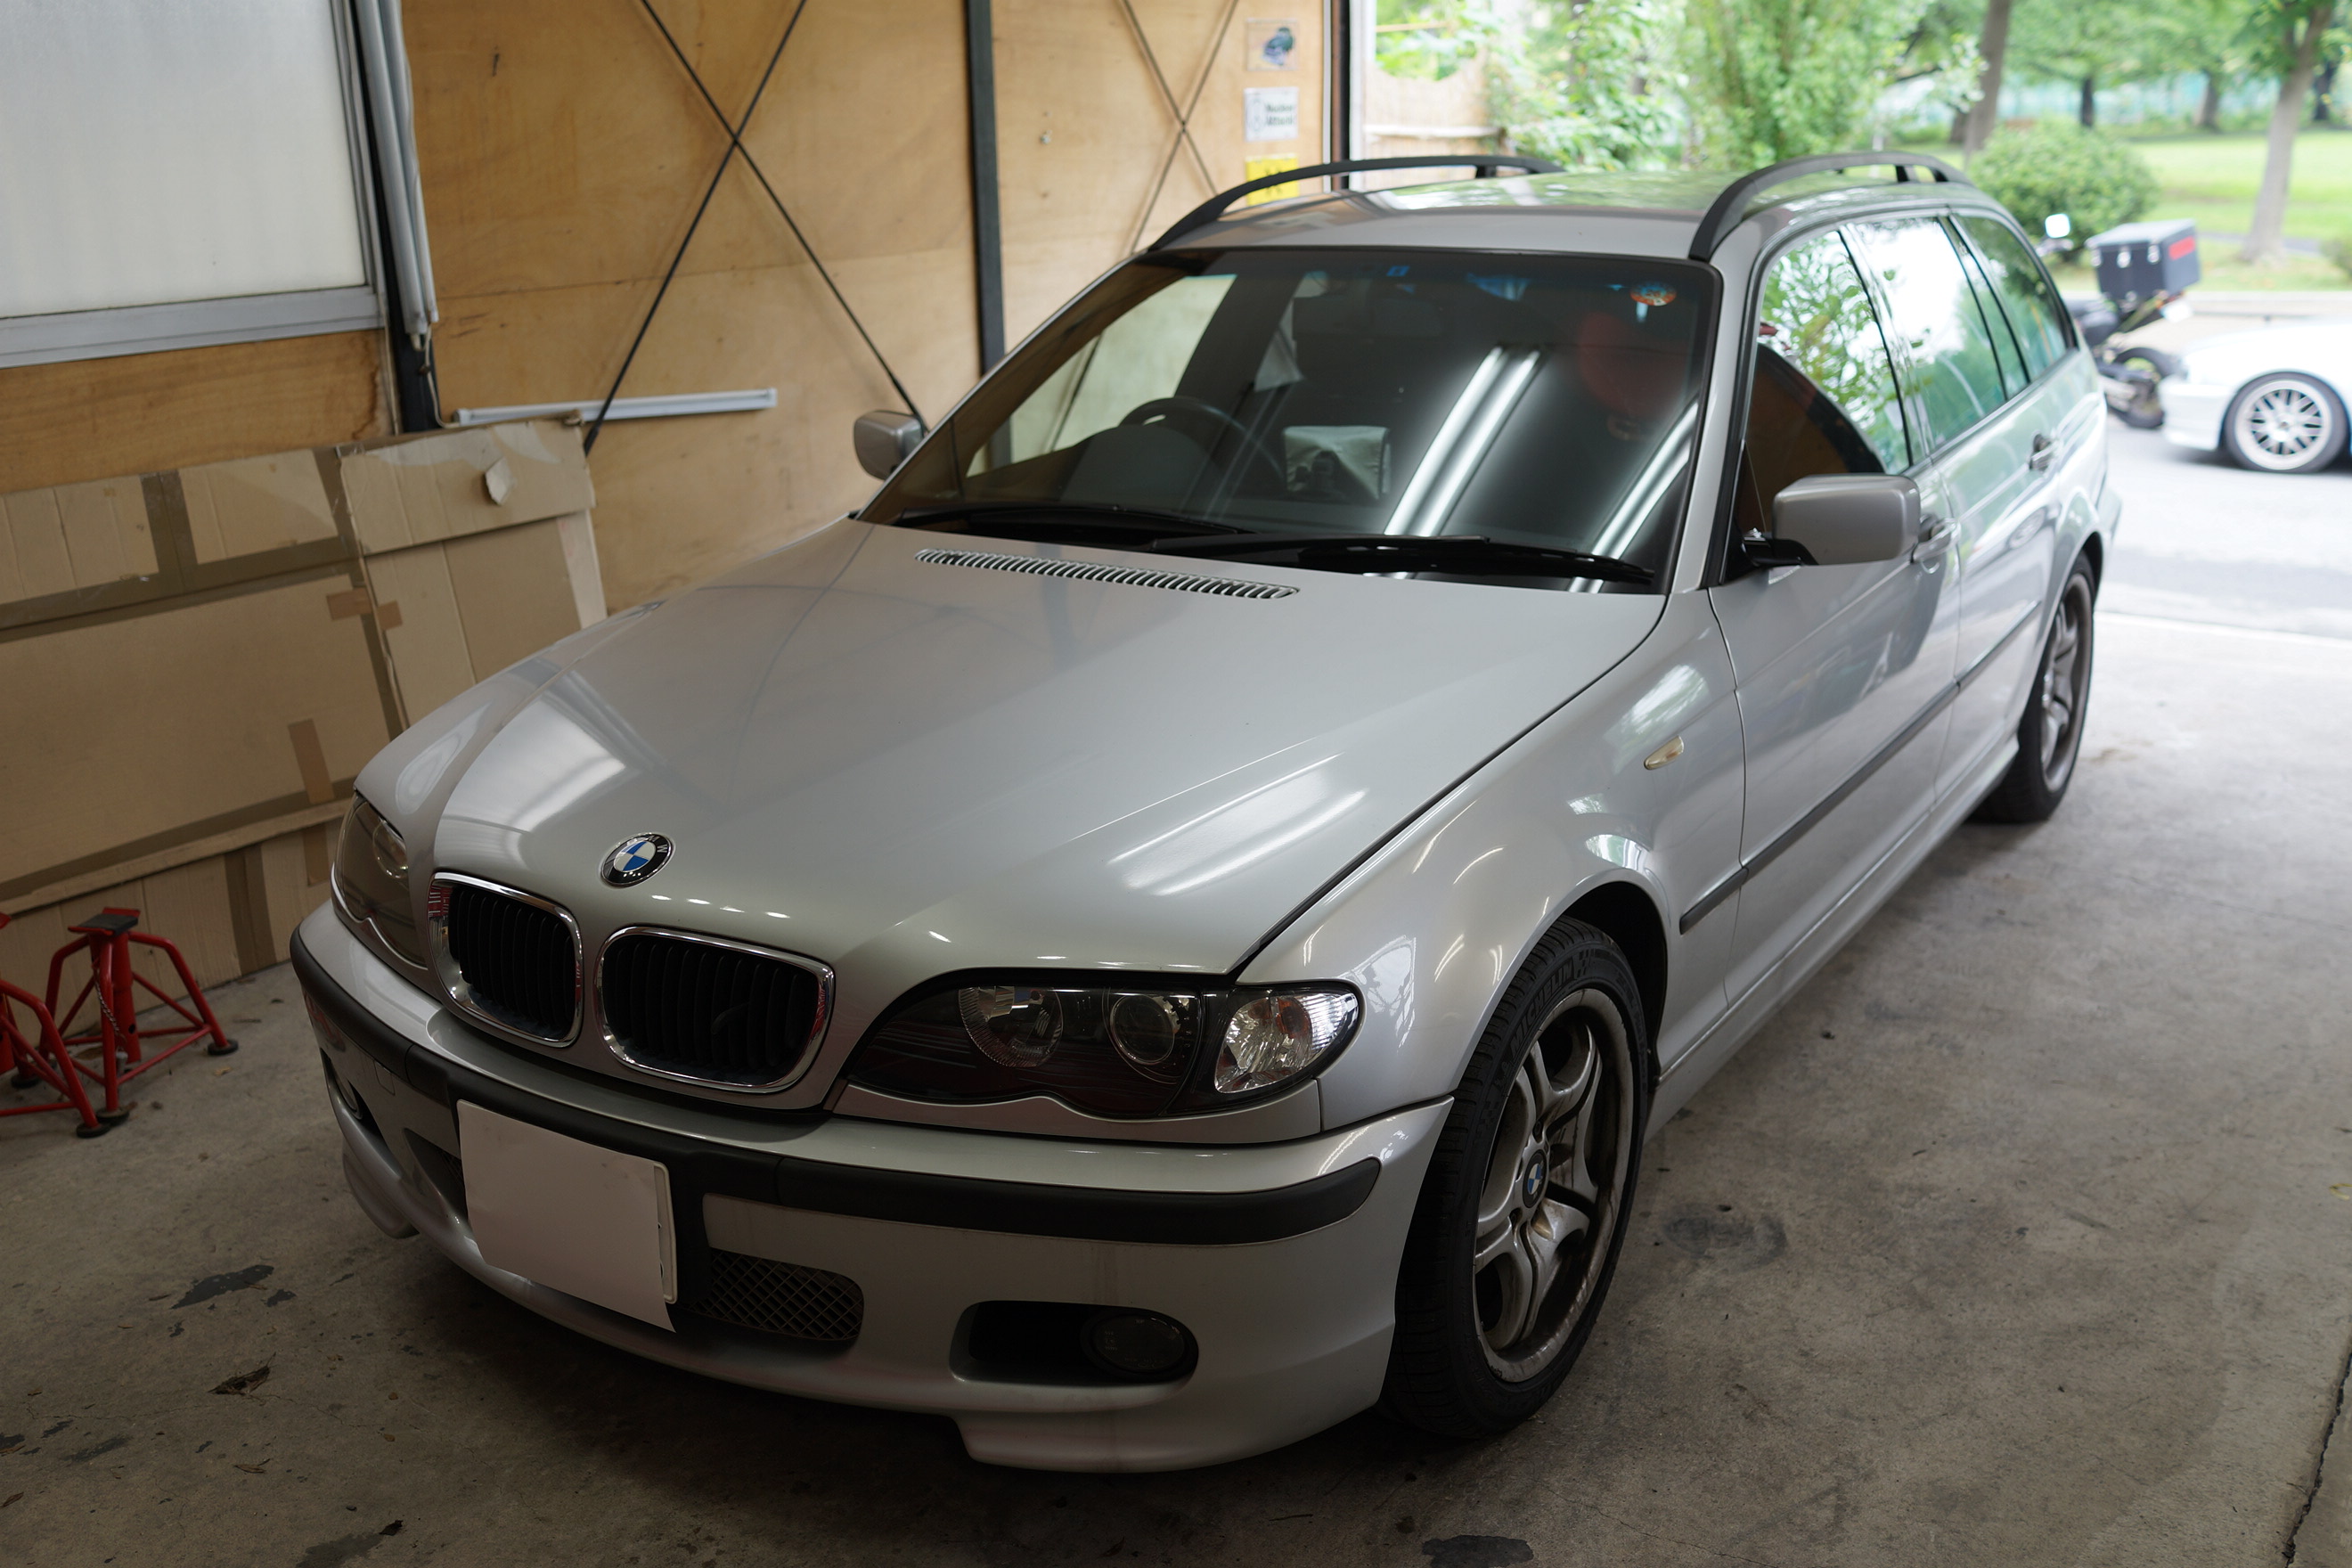 6/26 BMW E46 後期ASCユニット交換 改めて 弊社ユーザー様に感謝致します。 ABS修理のお店Jスクエア